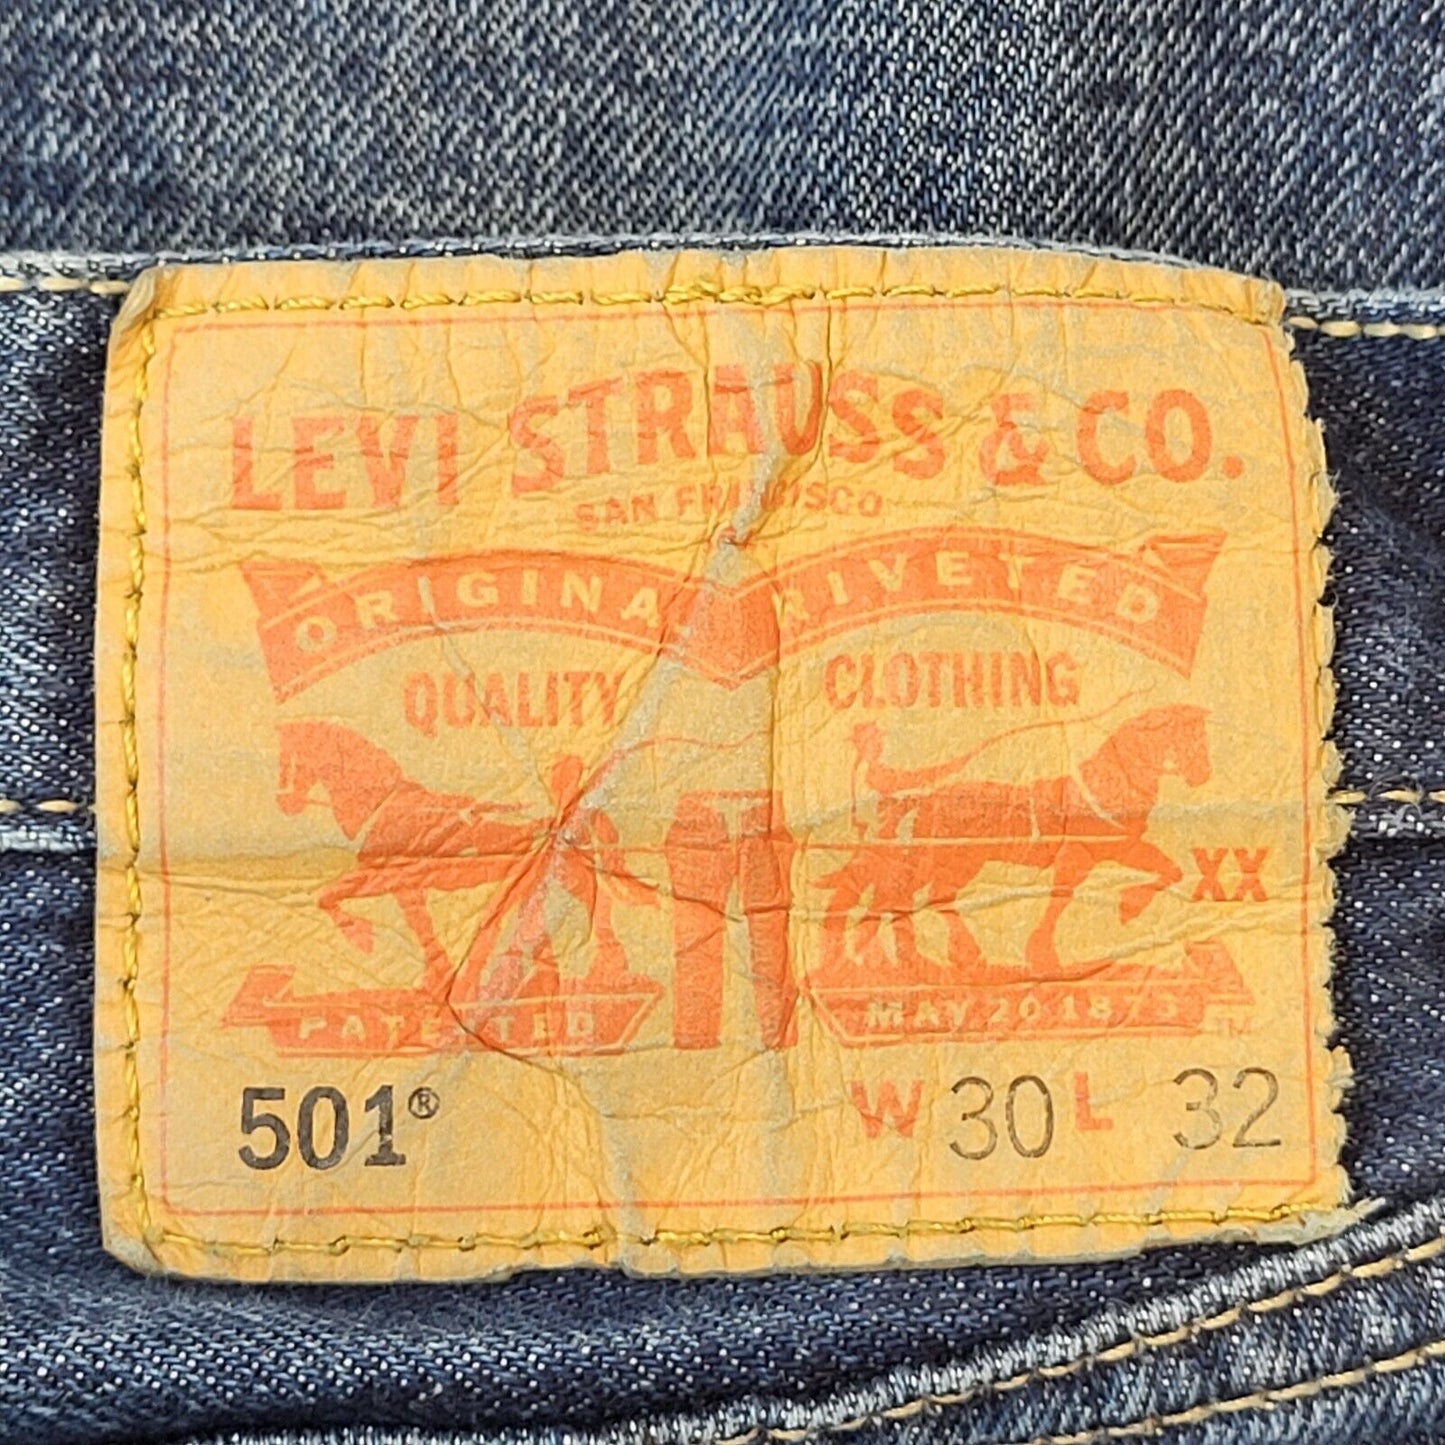 Levi's Jeans (S)